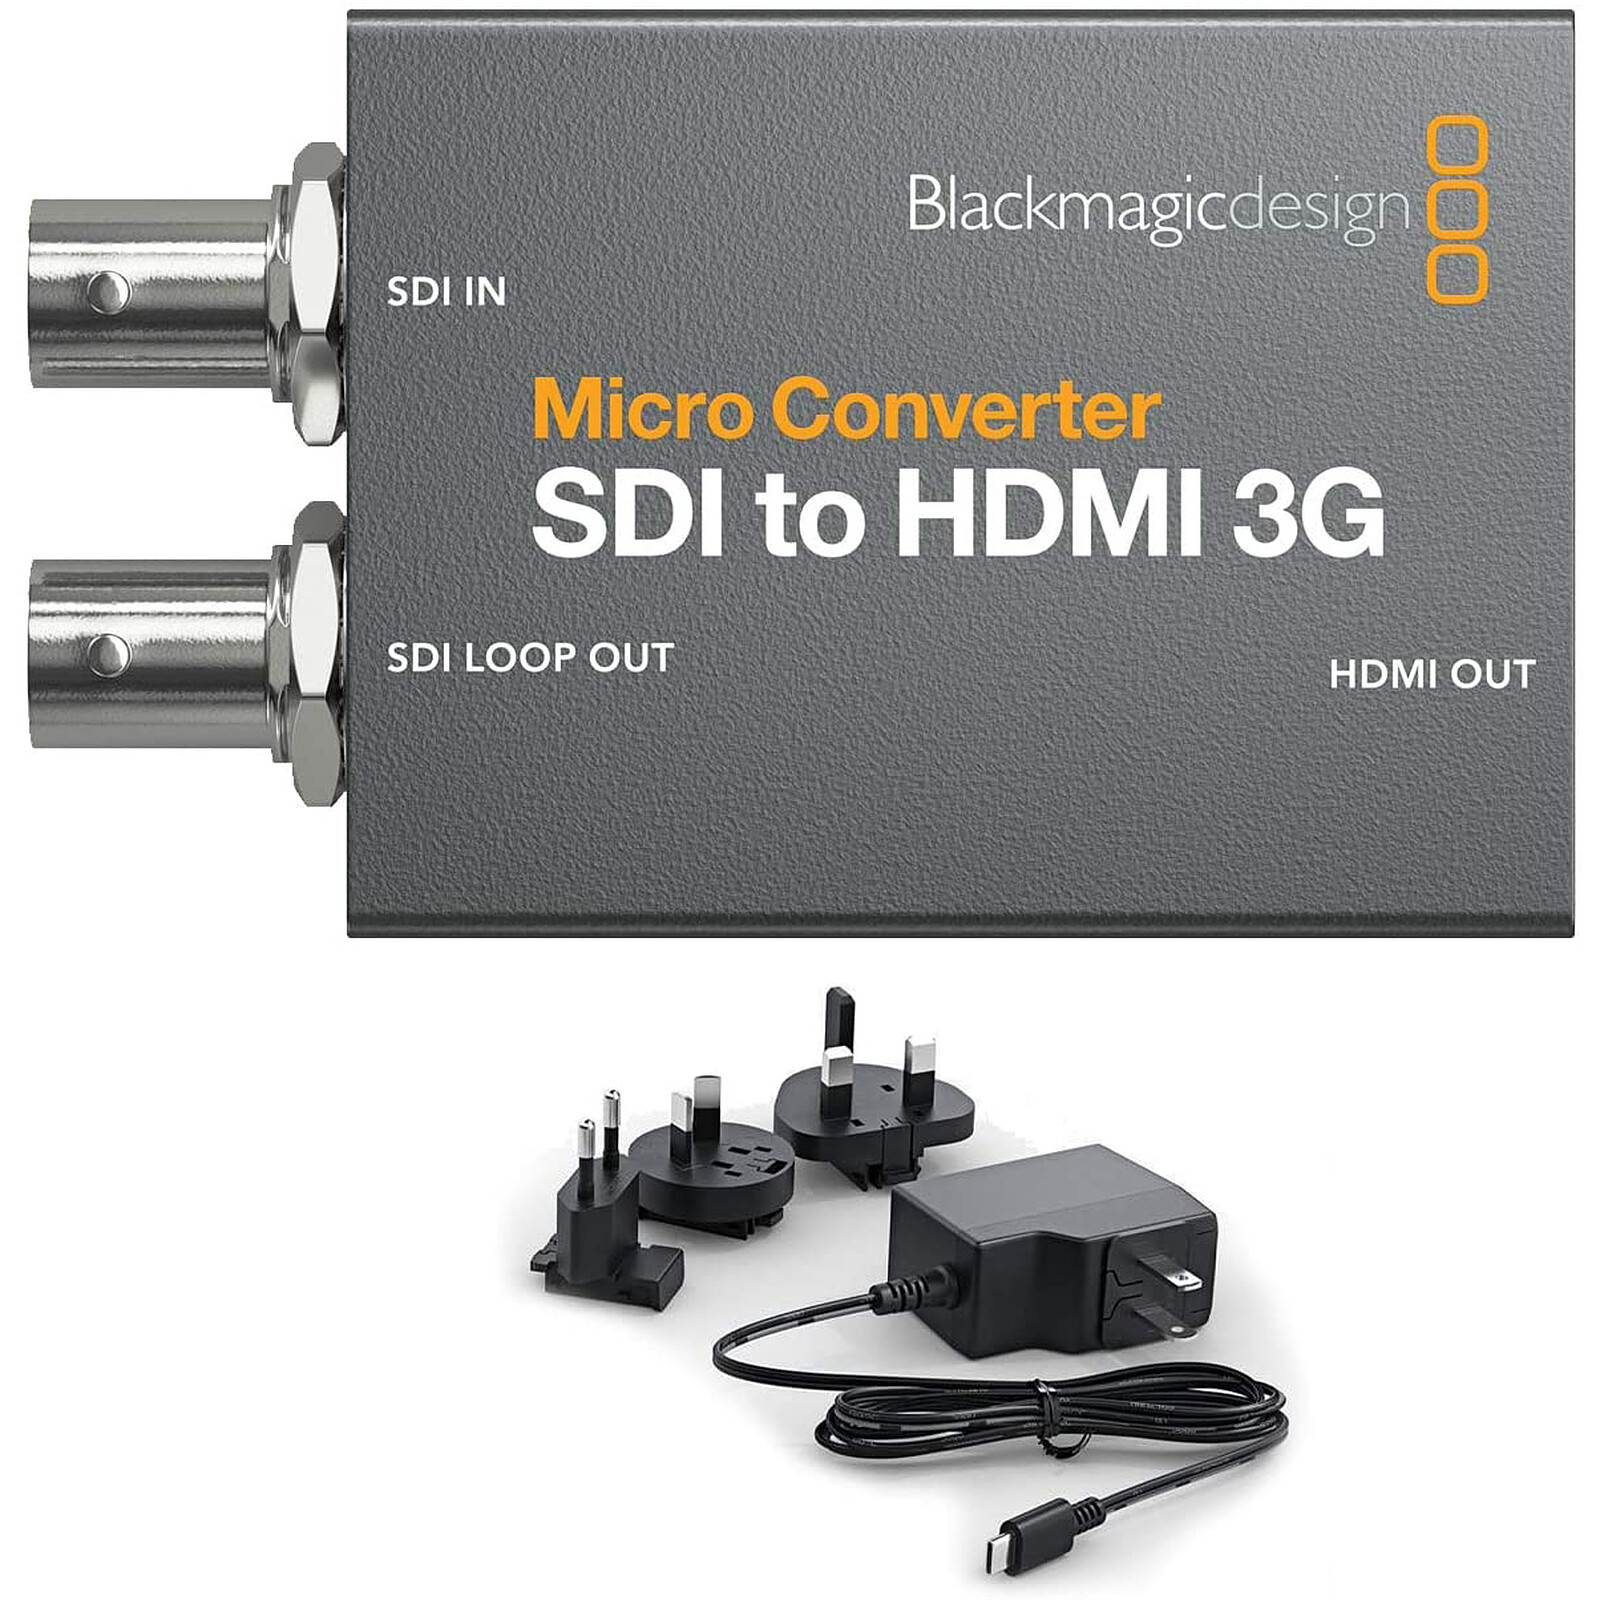 Blackmagic Design Micro Converter SDI to HDMI 3G wPSU - Video